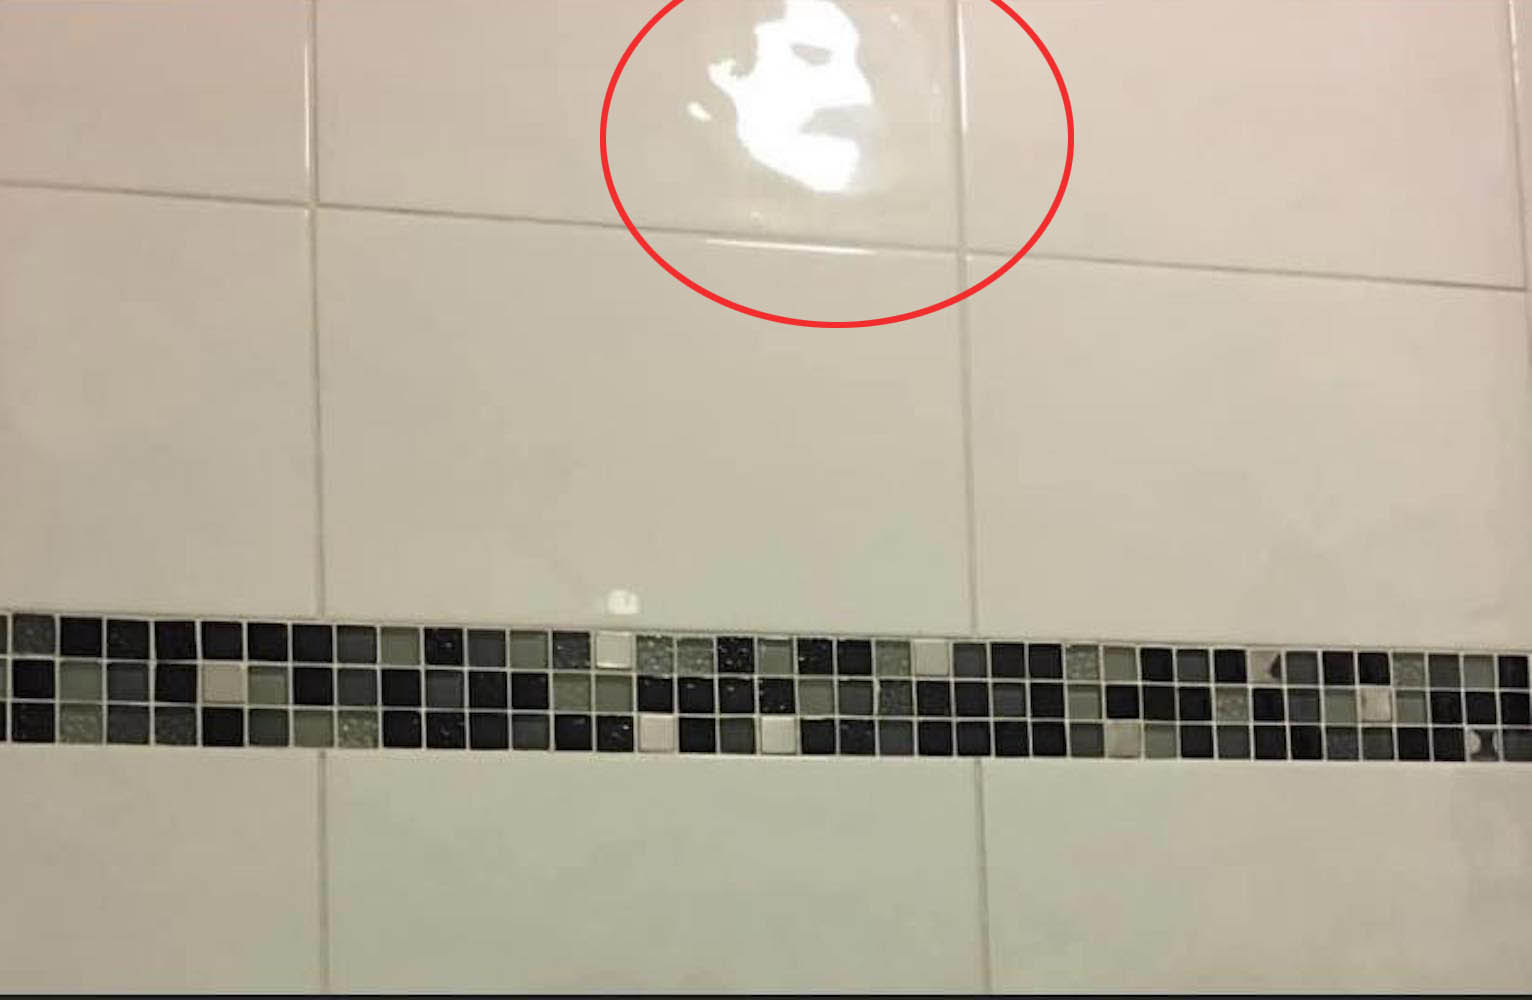 Freddie Mercury’s face on Louise’s bathroom tiles.